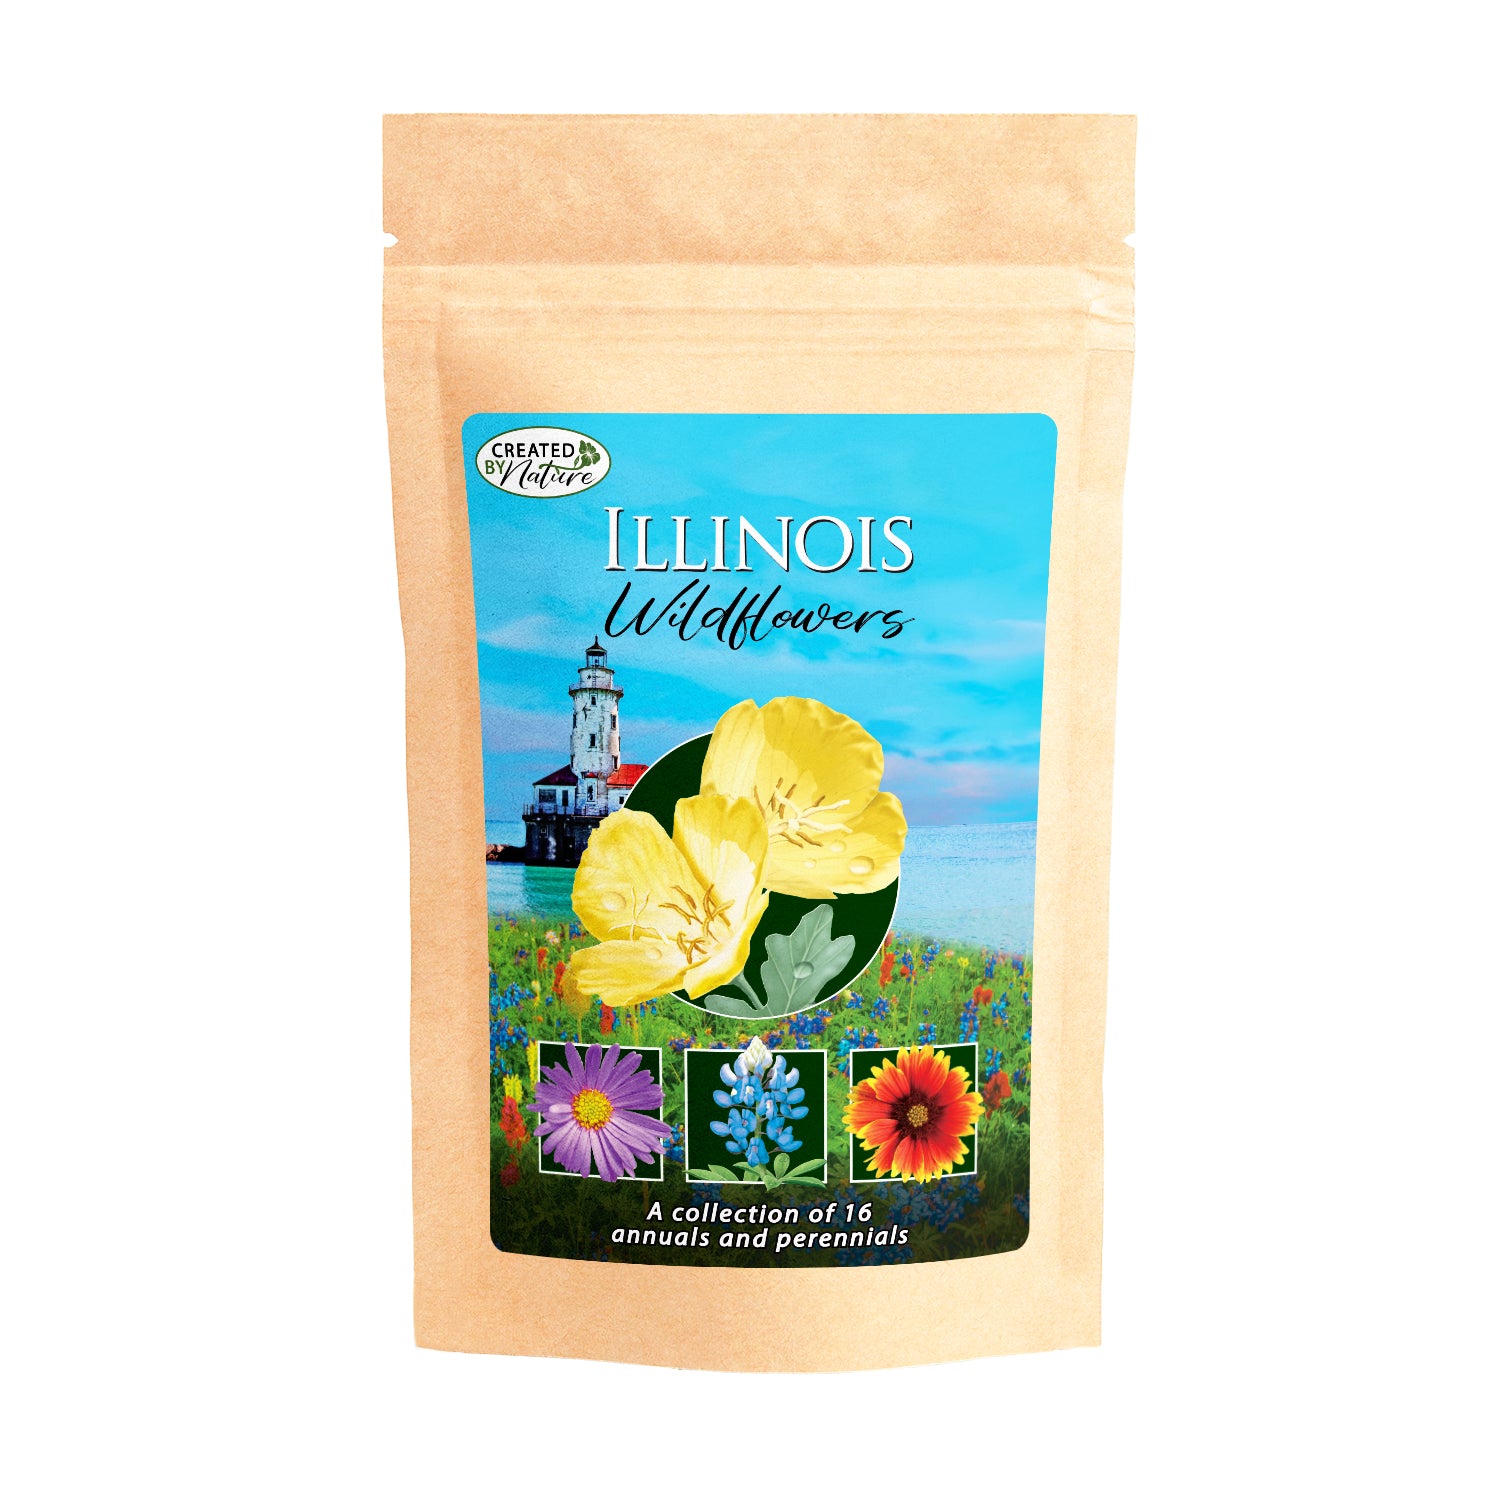 Illinois wildflower seed mix